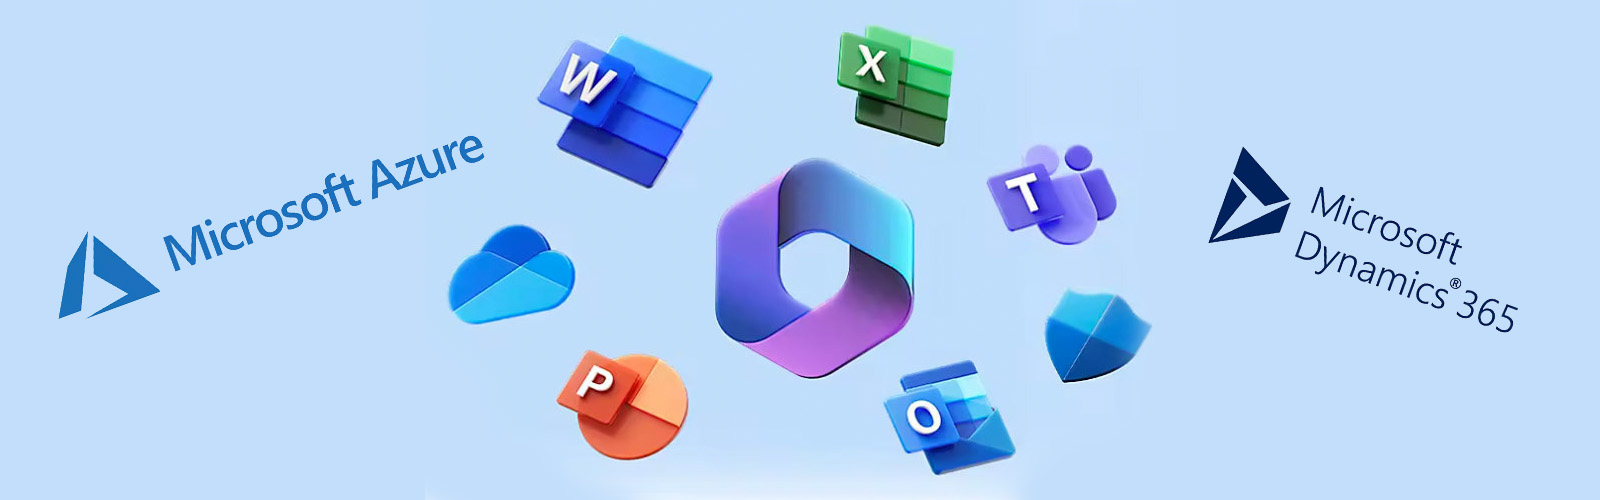 Microsoft software logos